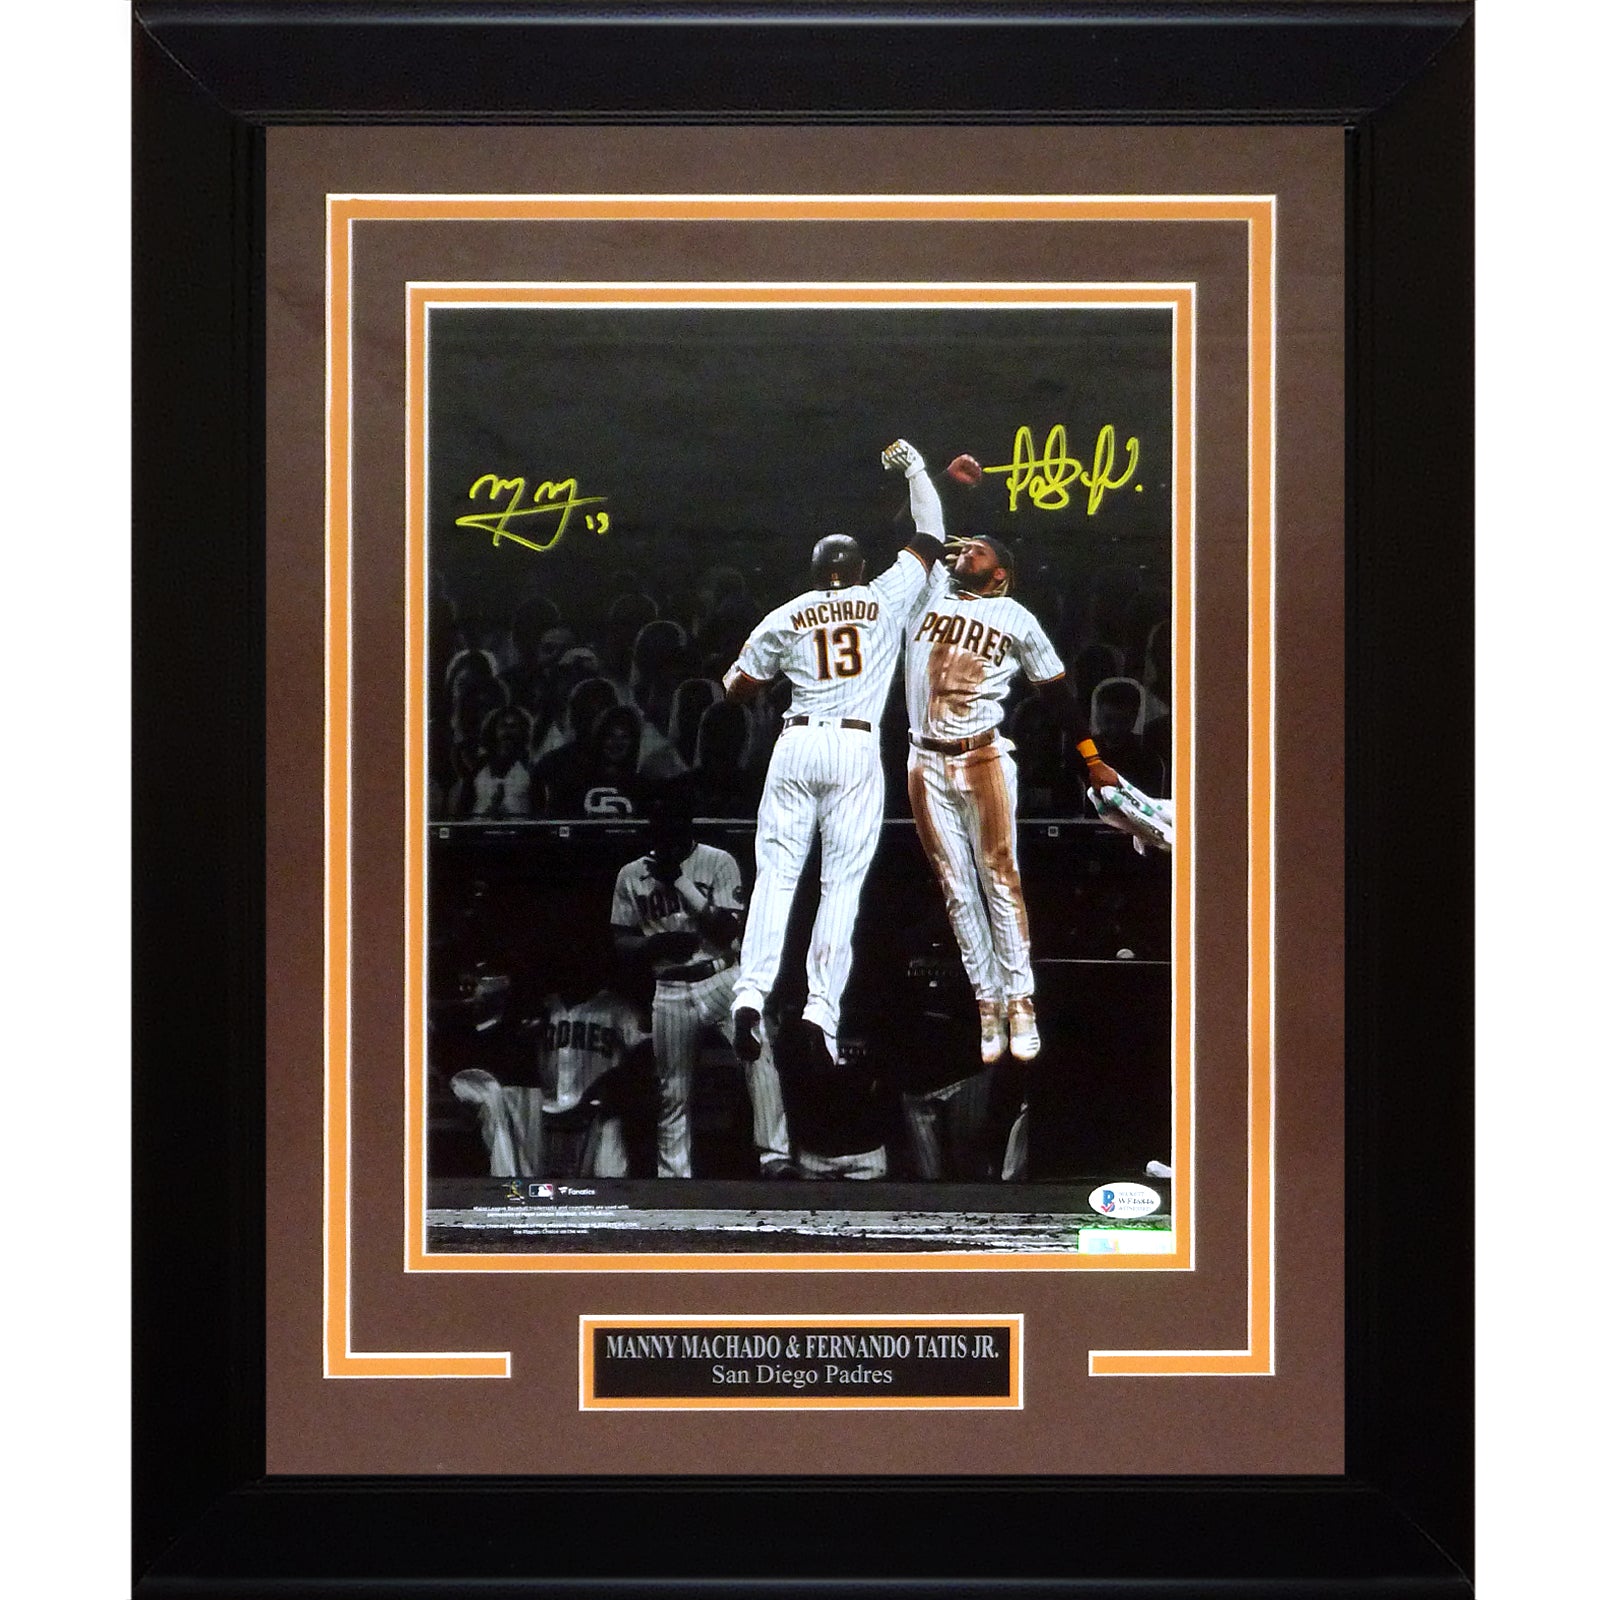 Fernando Tatis Jr And Manny Machado Autographed San Diego Padres (Spotlight) Deluxe Framed 11x14 Photo - Beckett